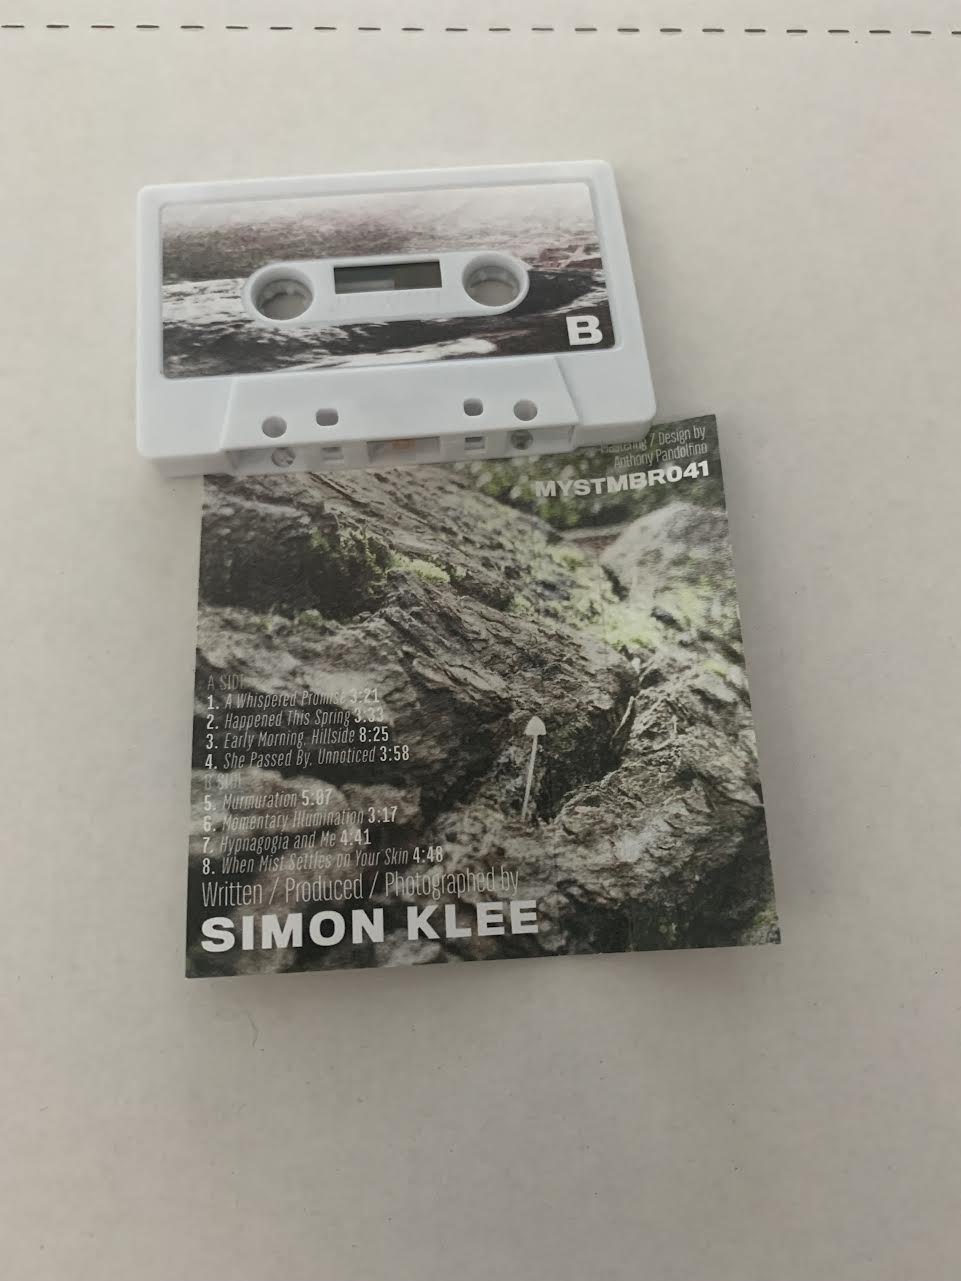 Simon Klee - Momentary Illumination [Downtempo] (Mystic Timbre - Tape - 7/13/20)